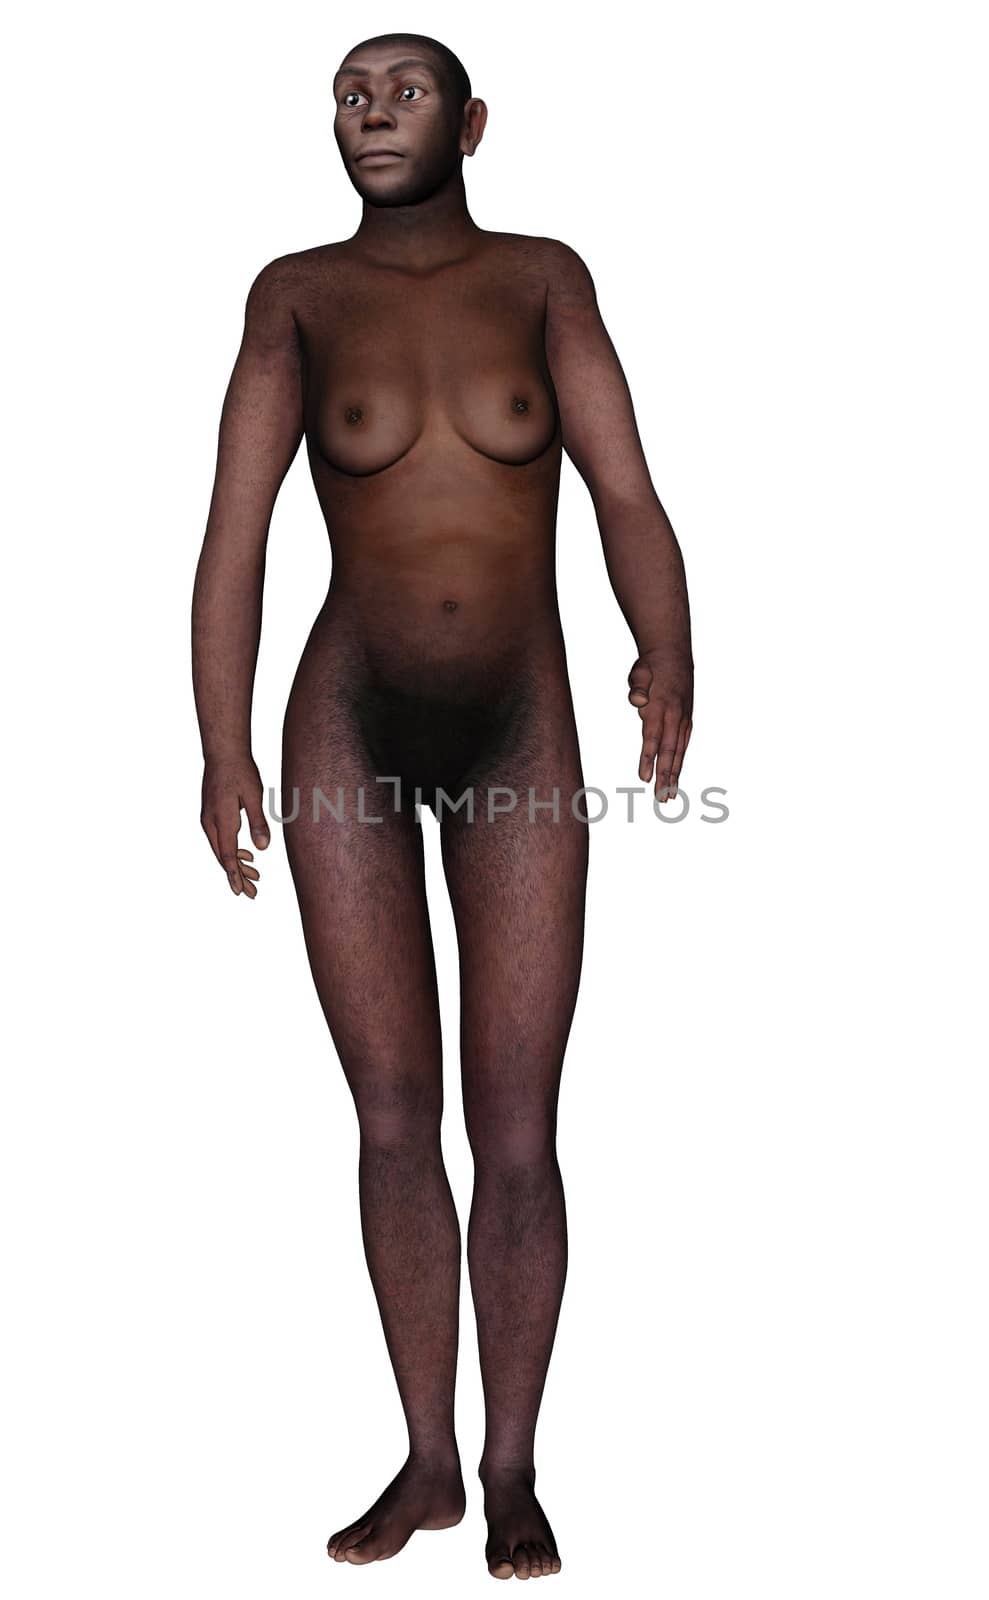 Female homo erectus walking - 3D render by Elenaphotos21